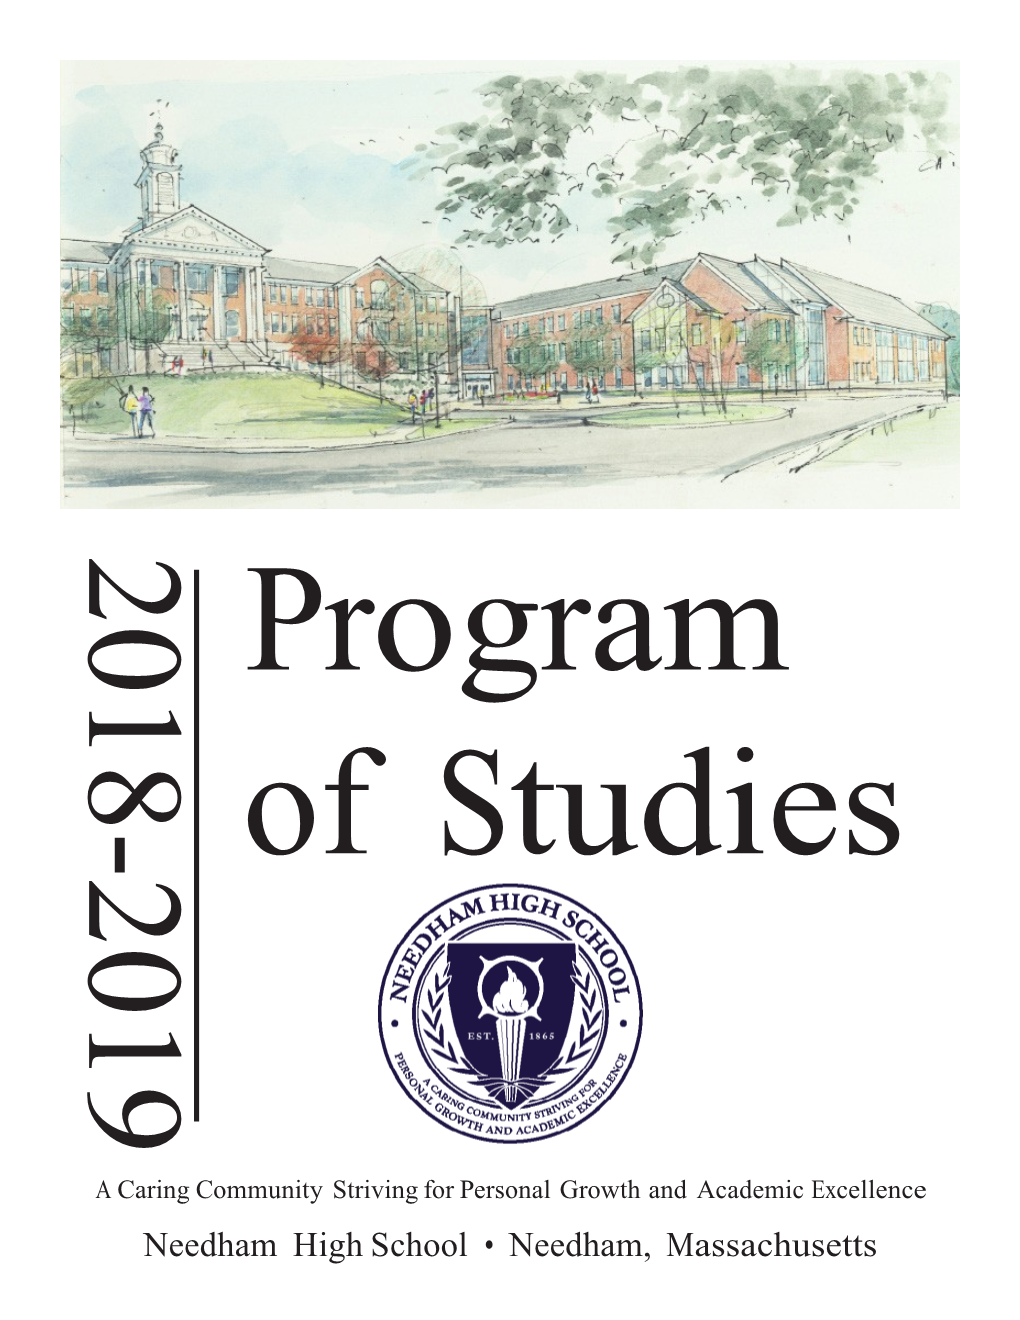 Program of Studies for the 2018-2019 Academic Year